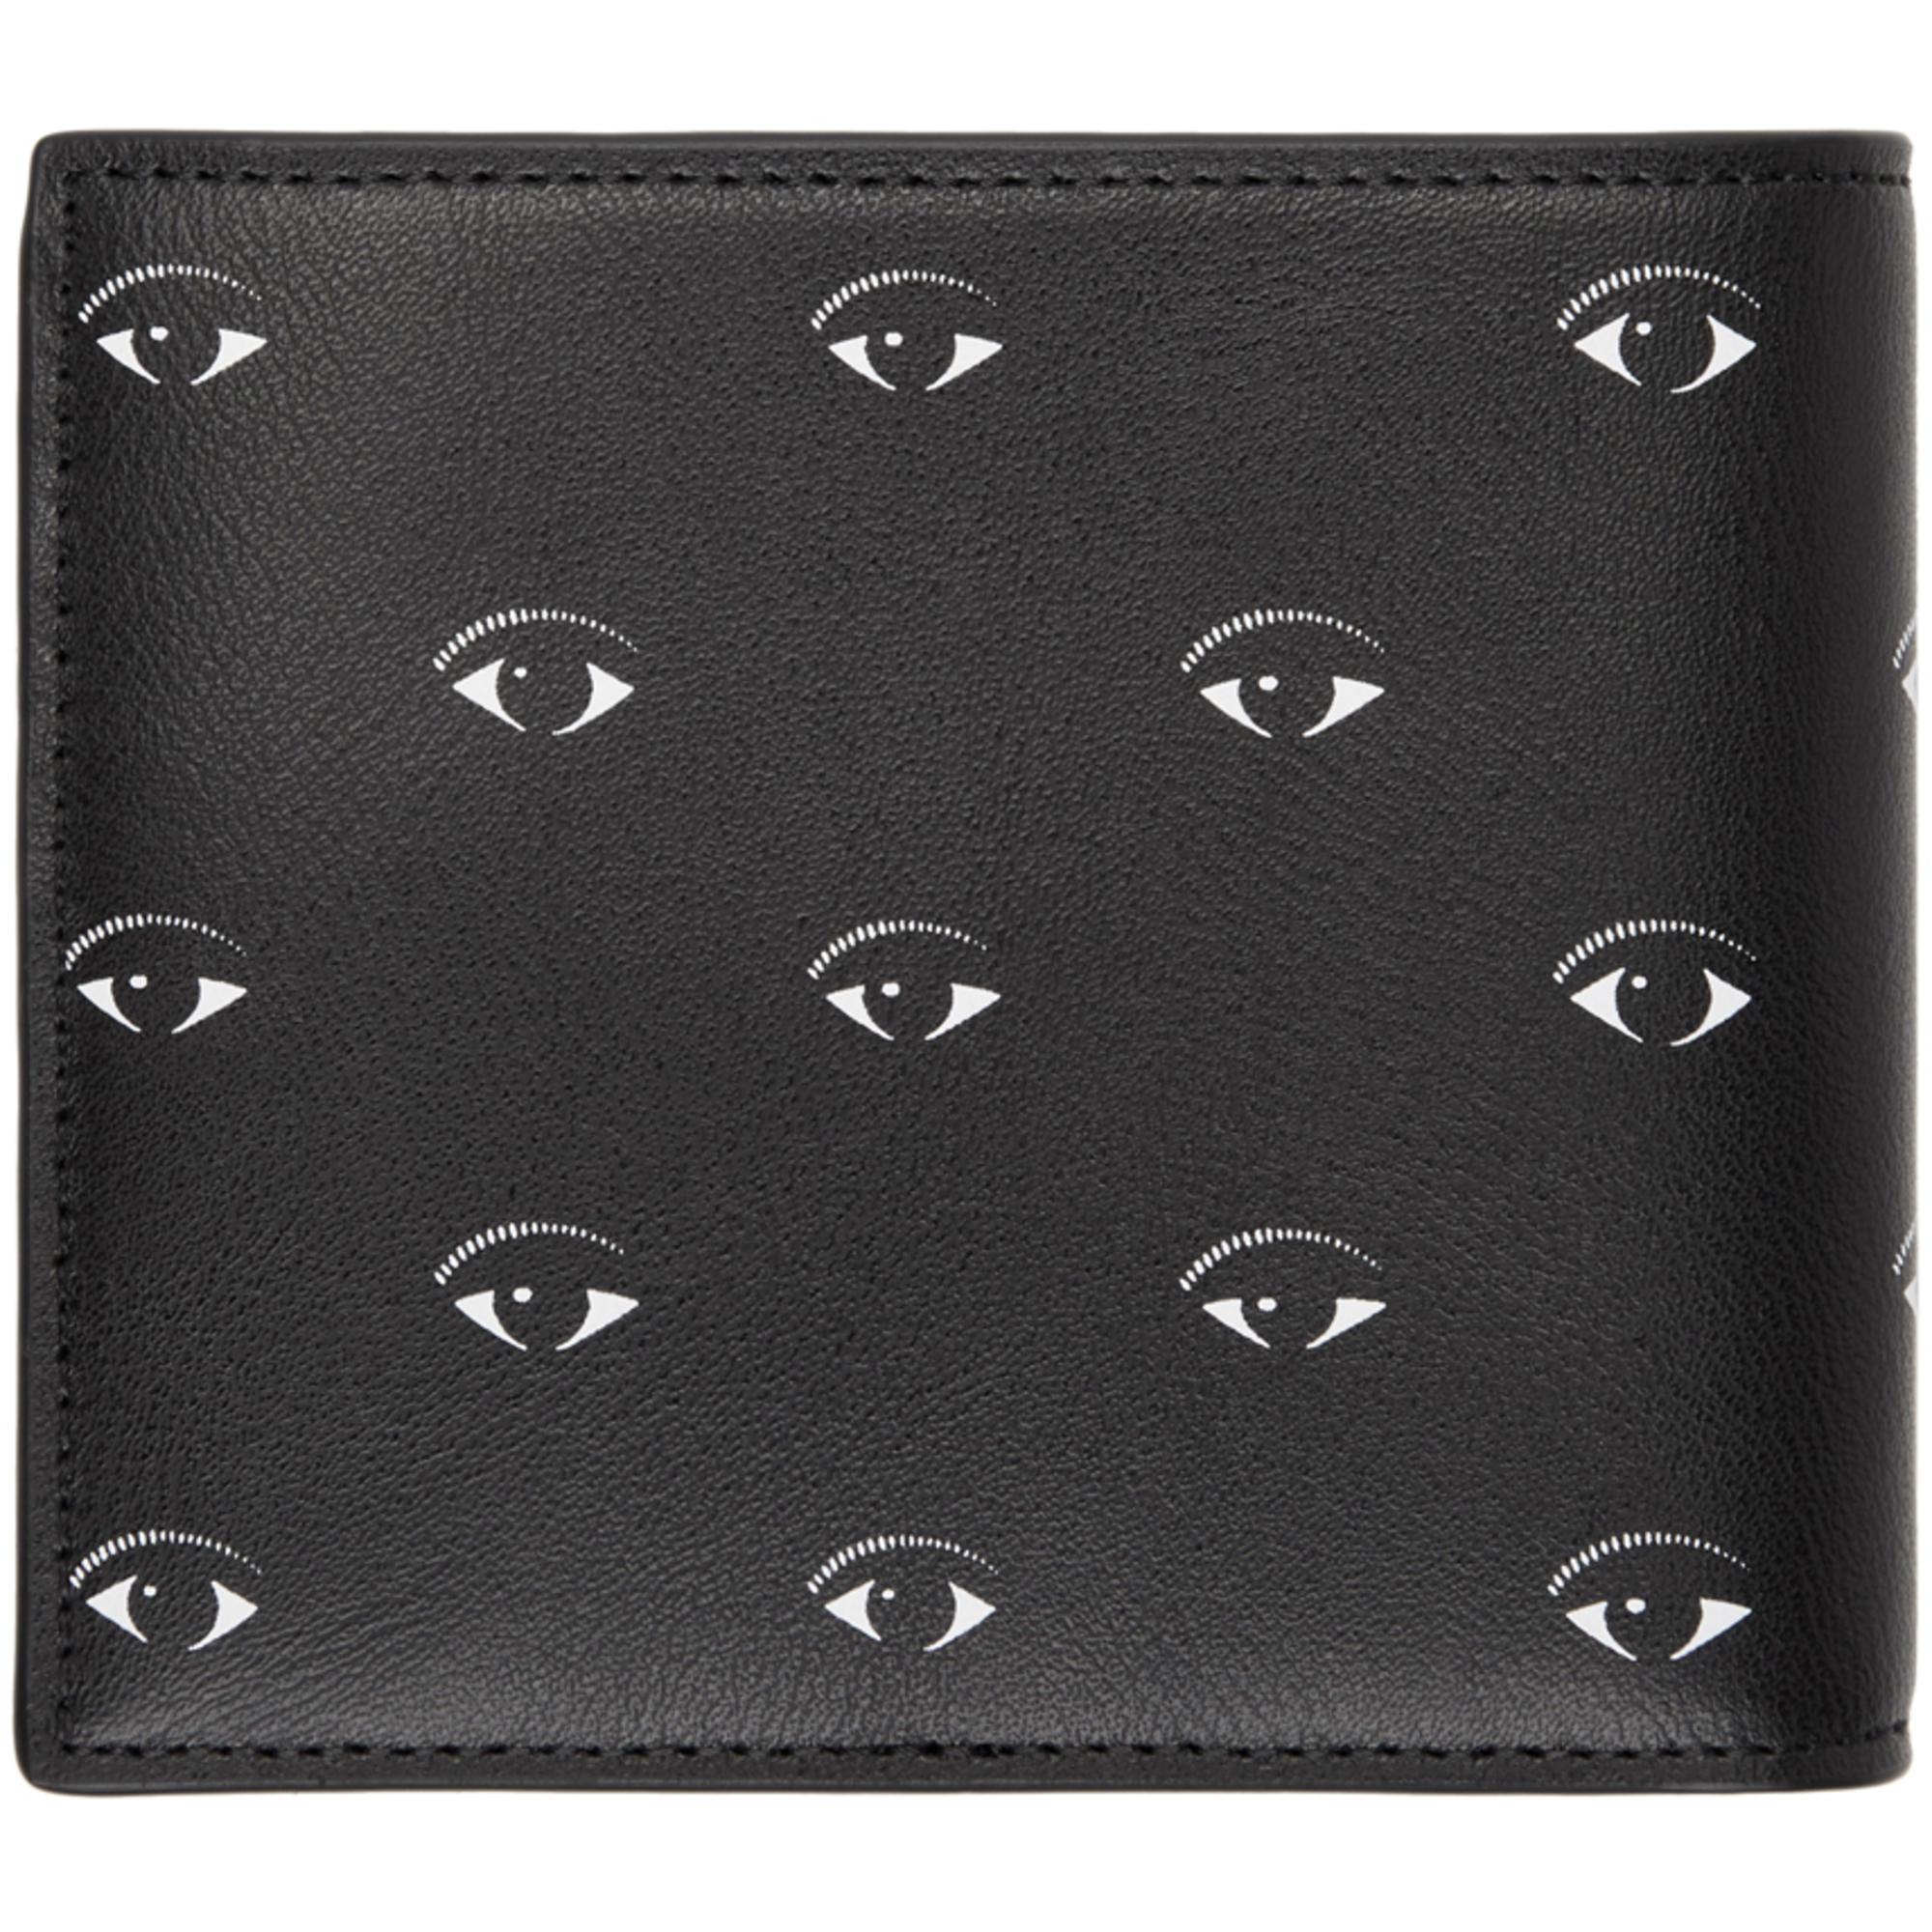 kenzo eye wallet